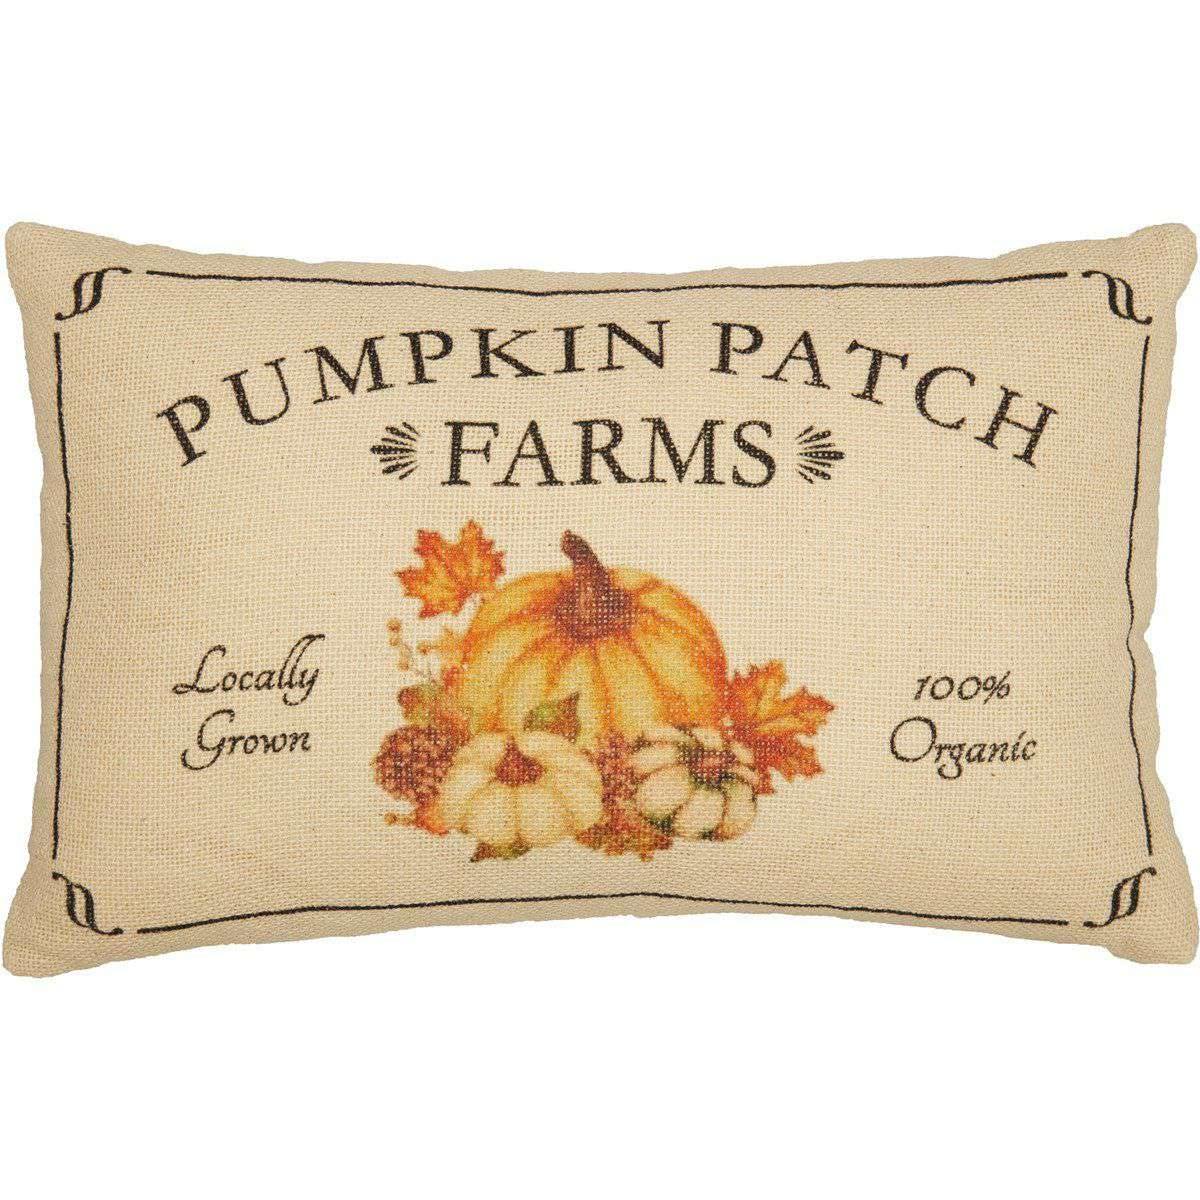 Fall on the Farm Pumpkin Patch Pillow 14x22 VHC Brands front